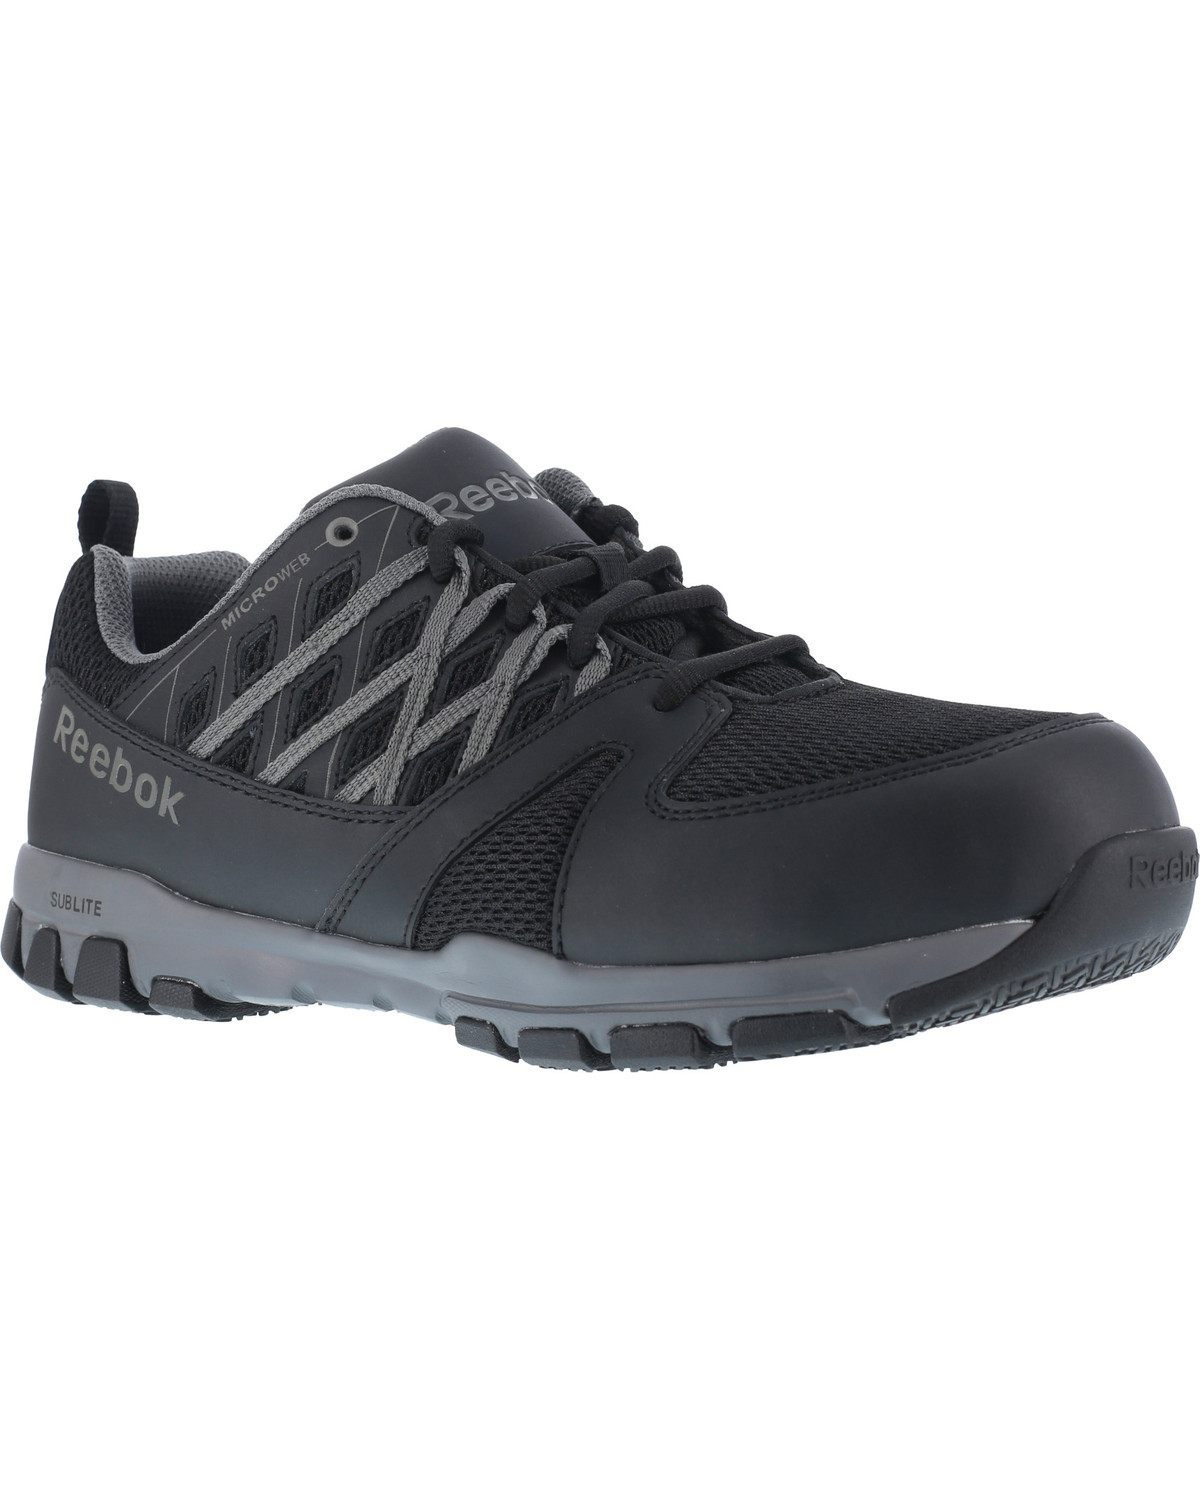 Reebok Men's Athletic Oxford Sublite Work Shoes - Soft Toe